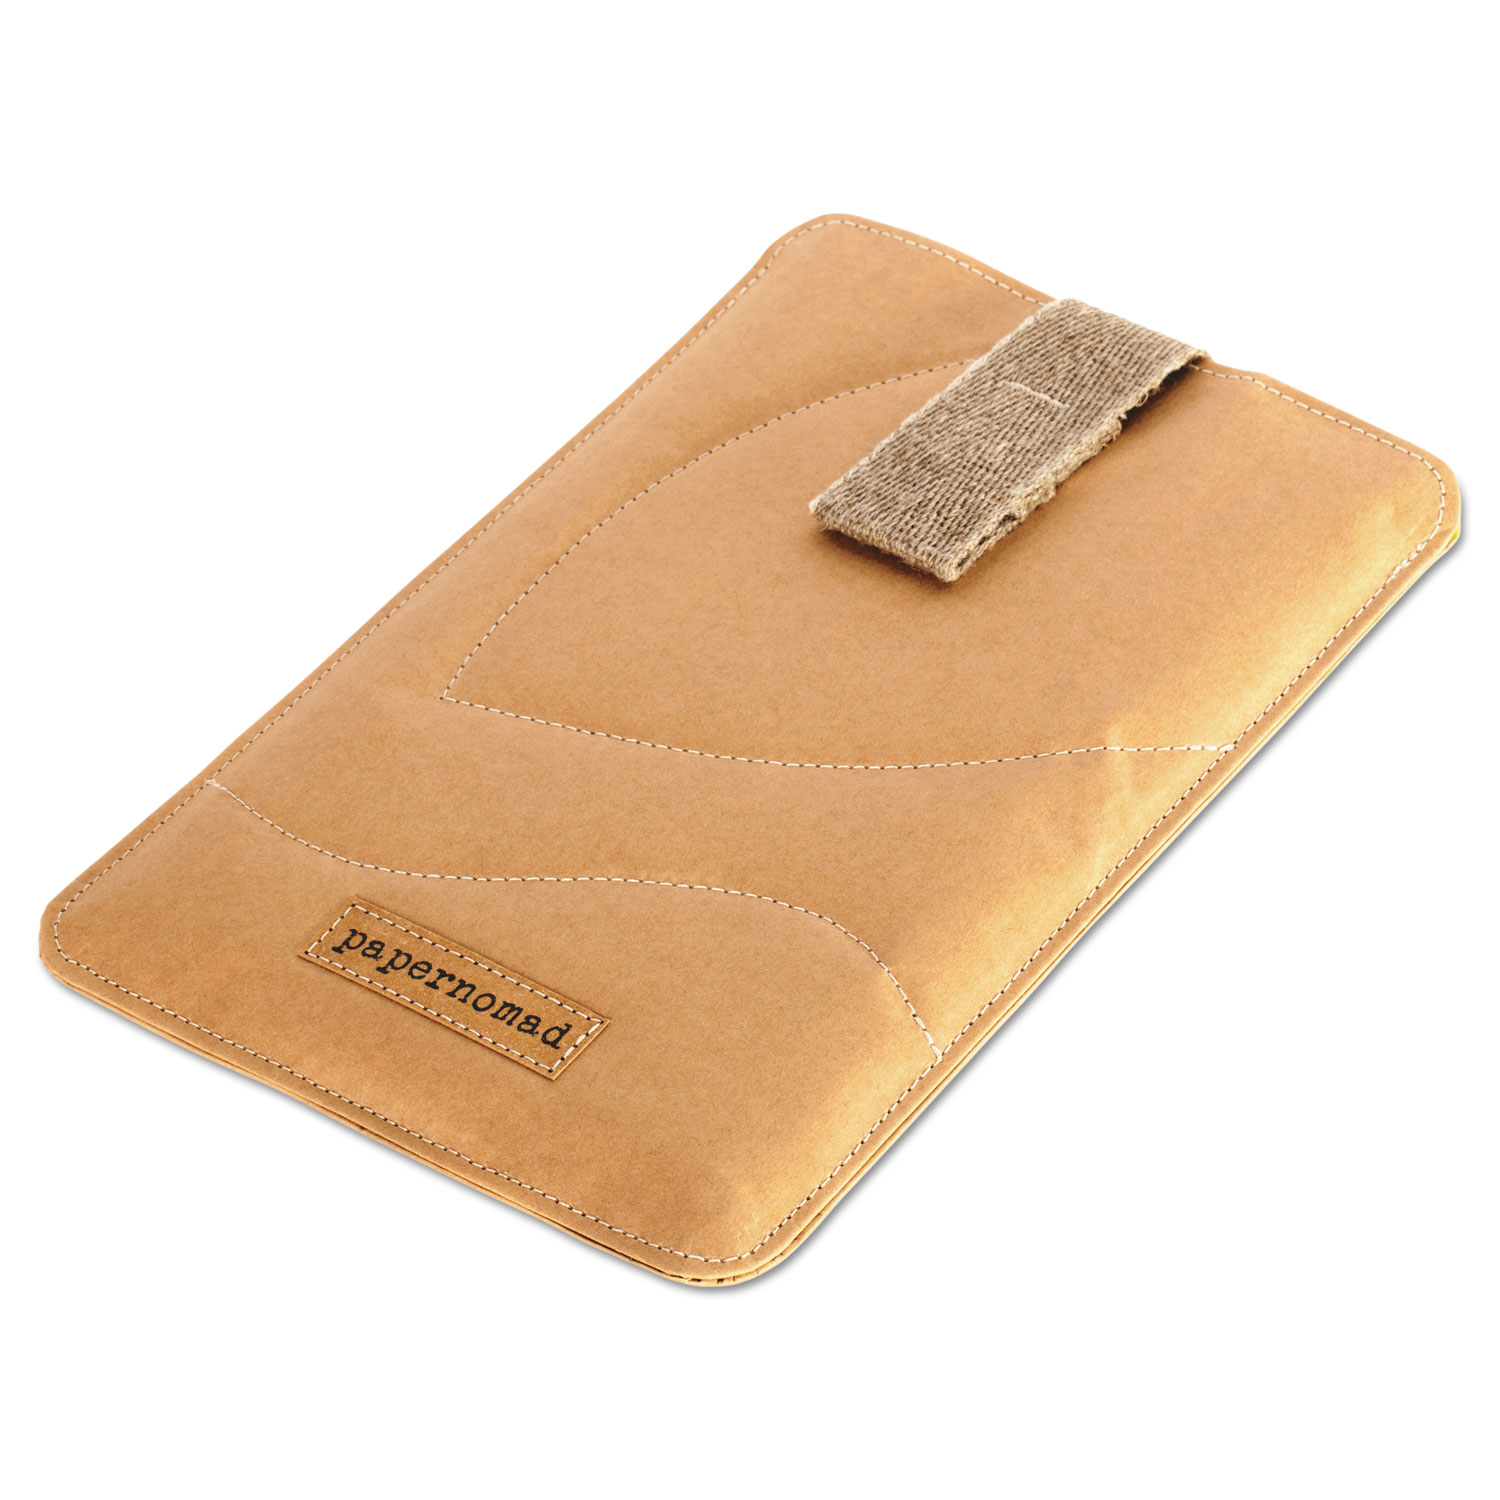 Papernomad Zatterino Sleeve for iPad mini, Beige